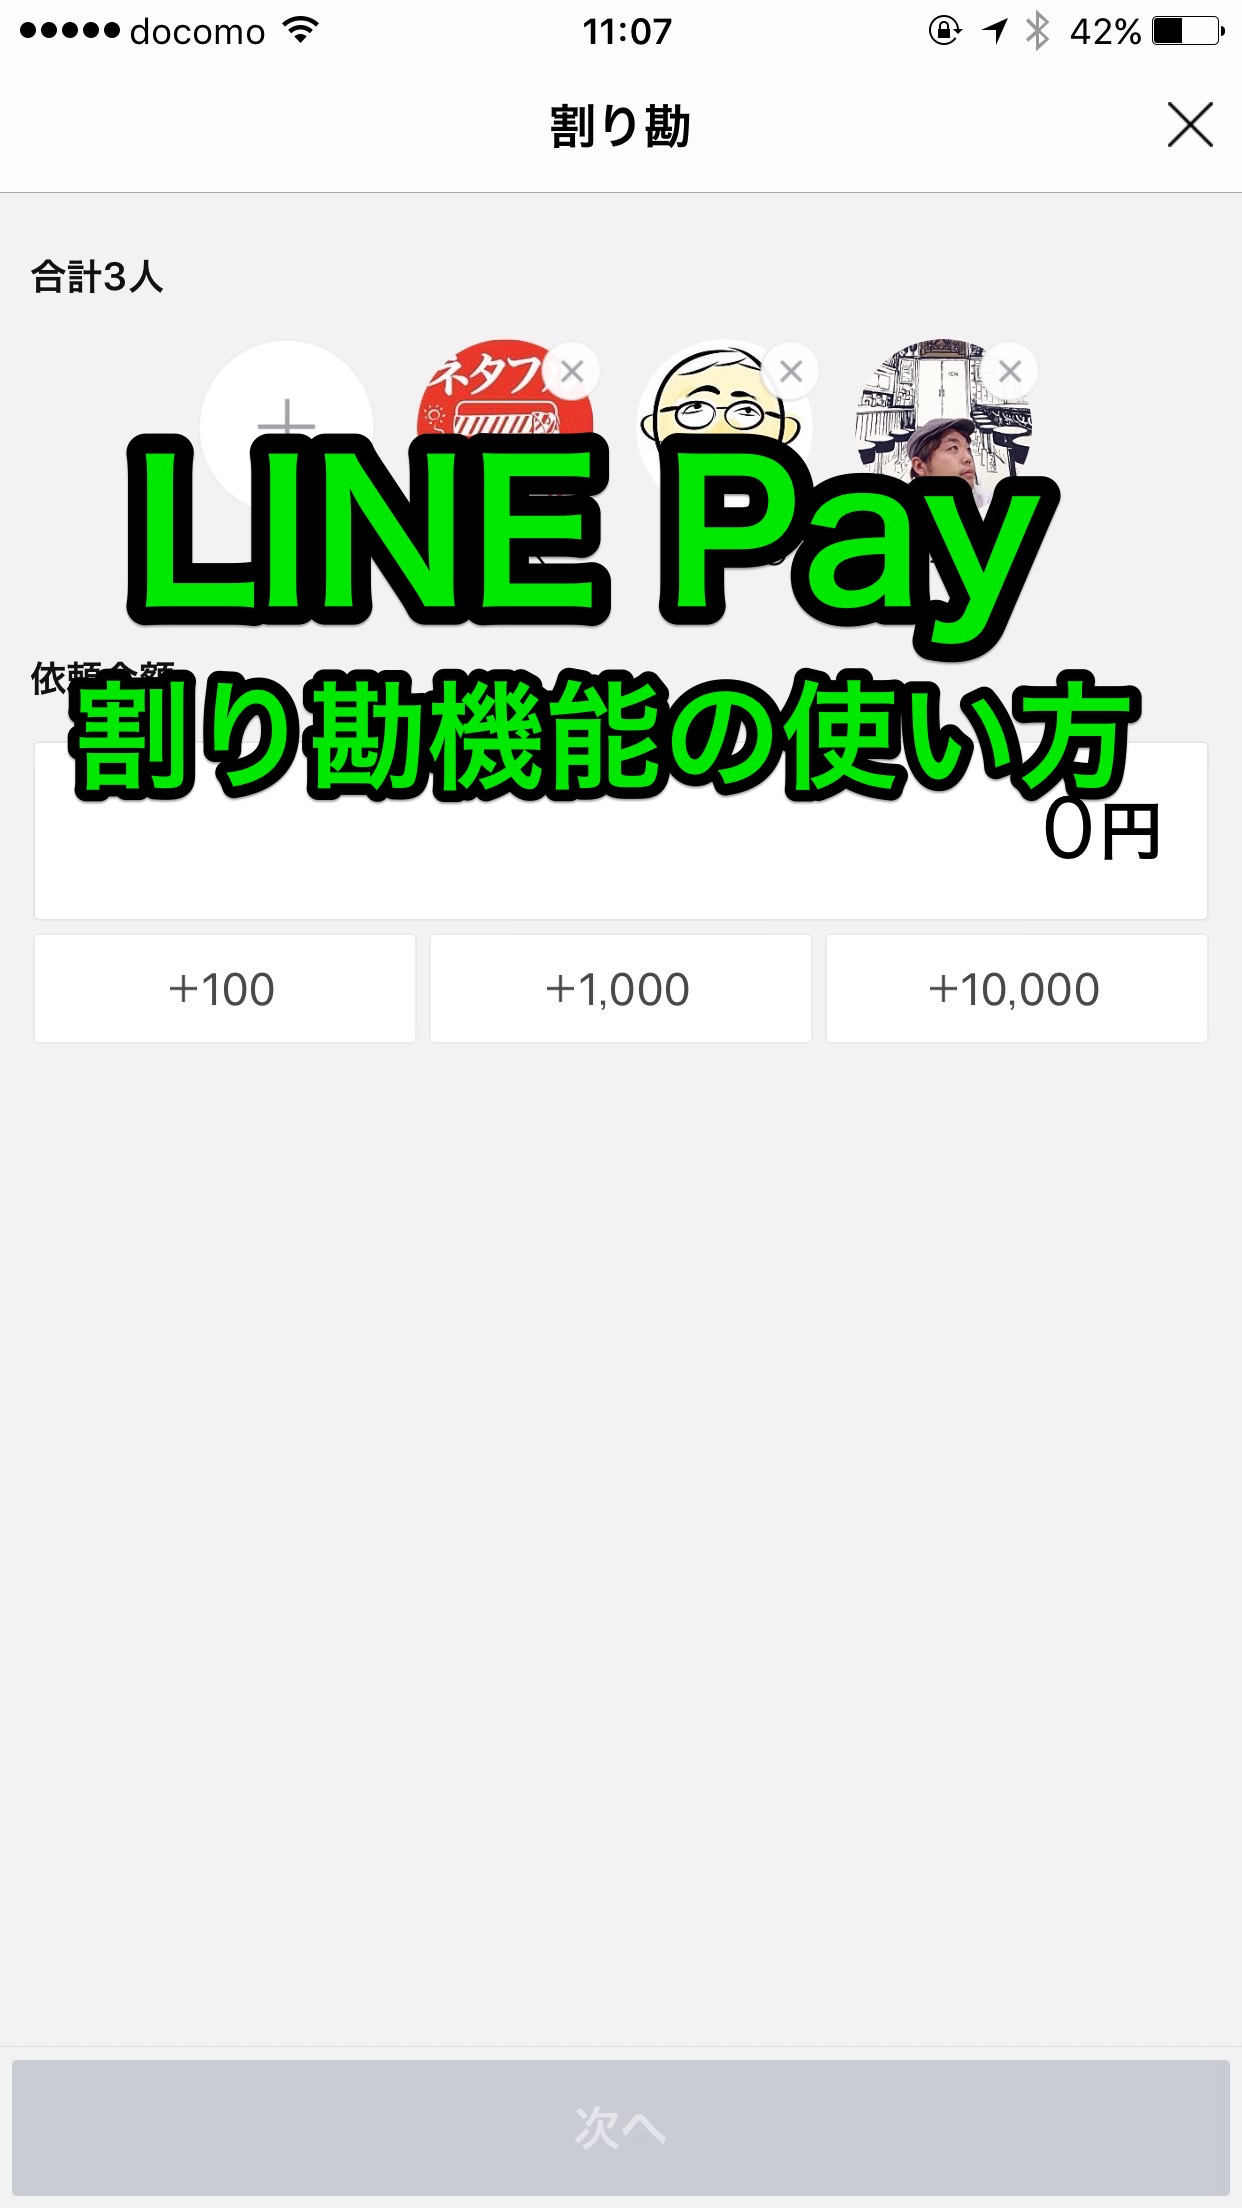 Line pay warikan 6795